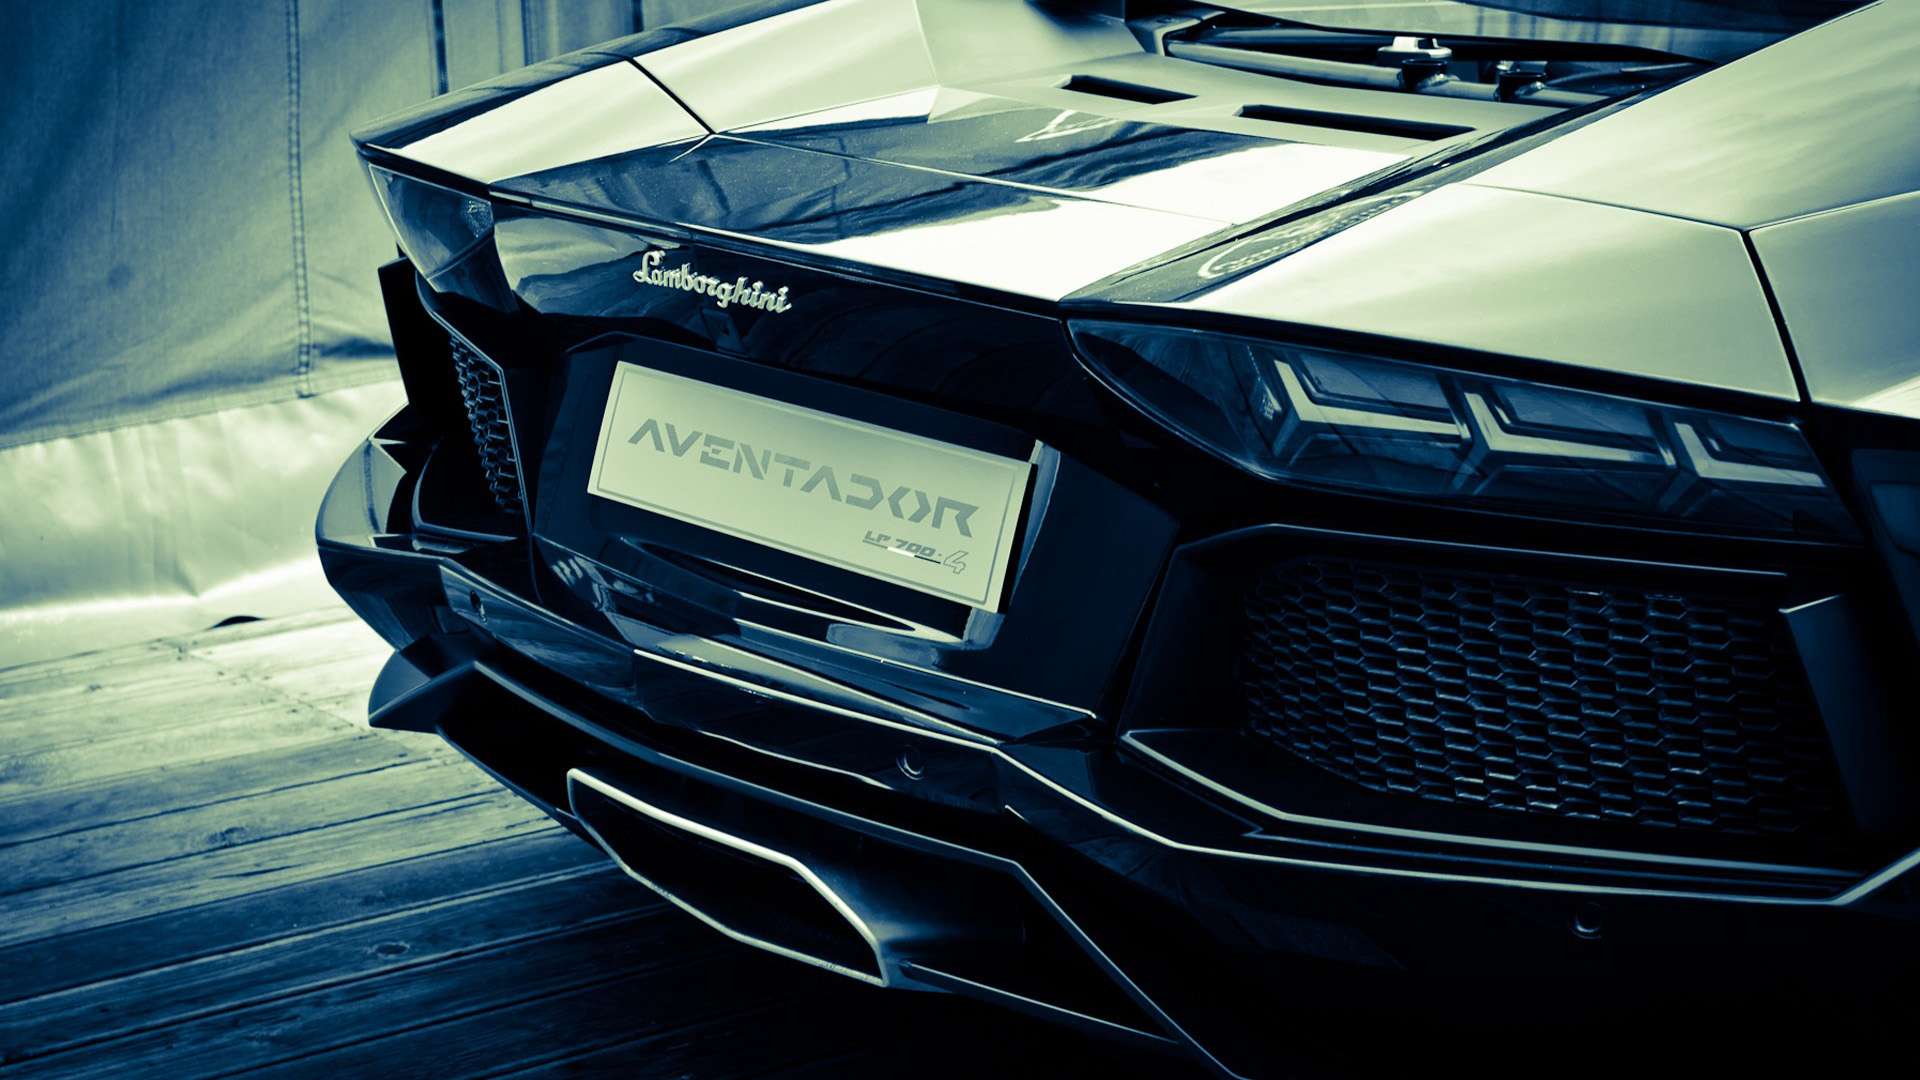 Car Lamborghini On HD Wallpaper For Desktop New Huracan